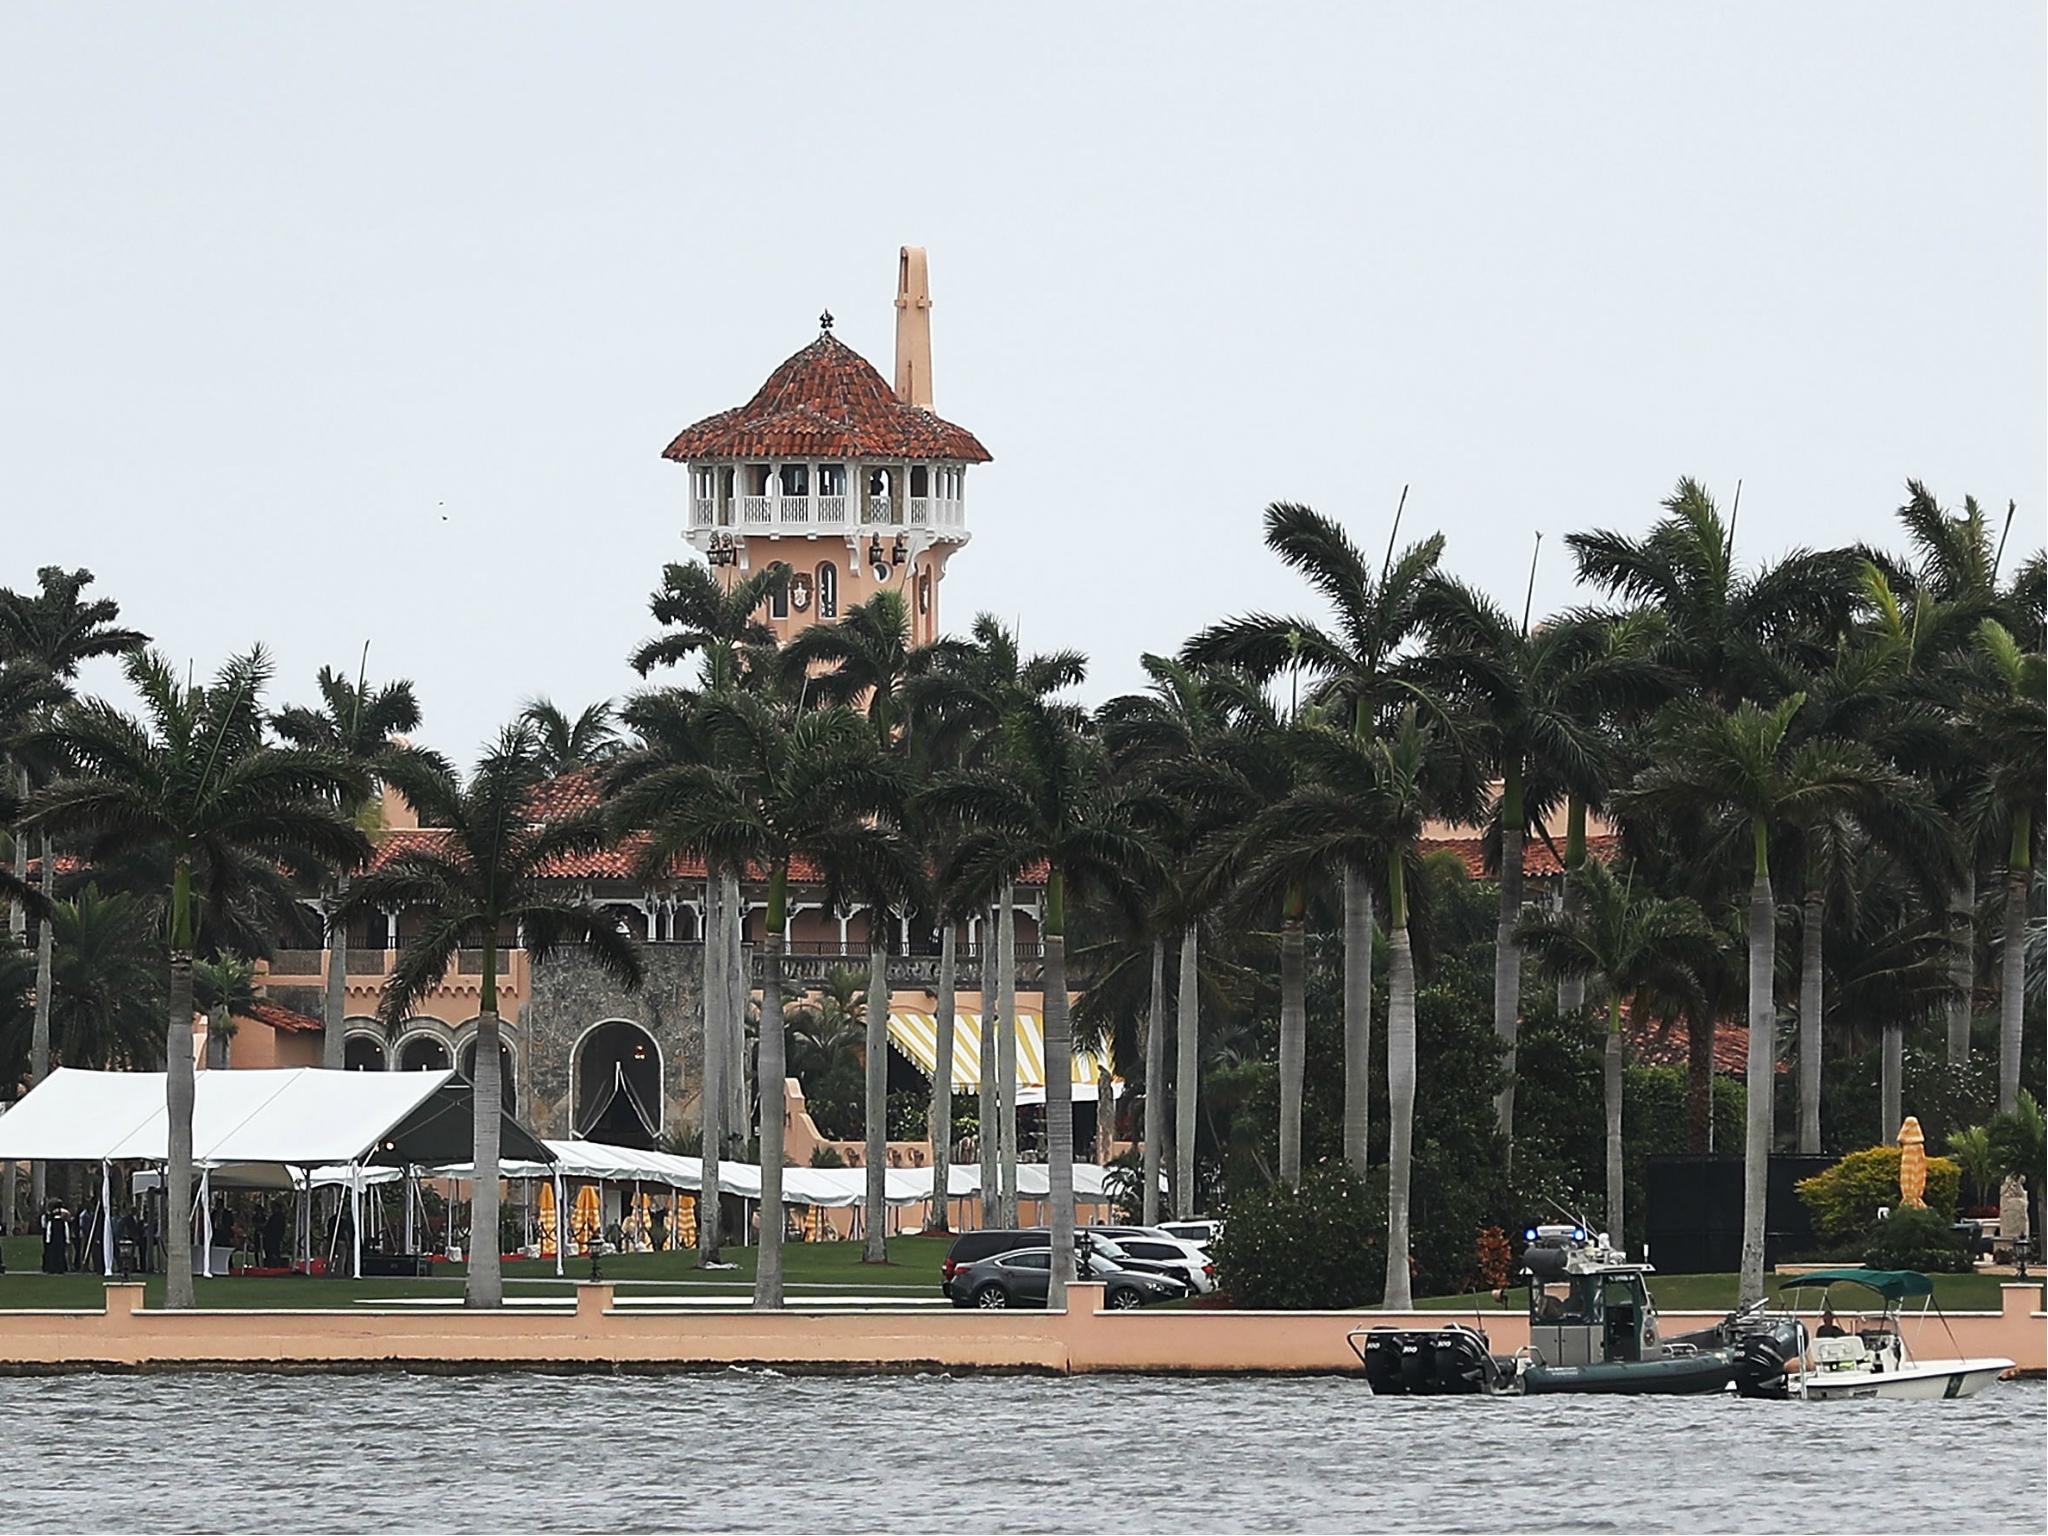 Mr Trump's Mar-a-Lago resort in Florida